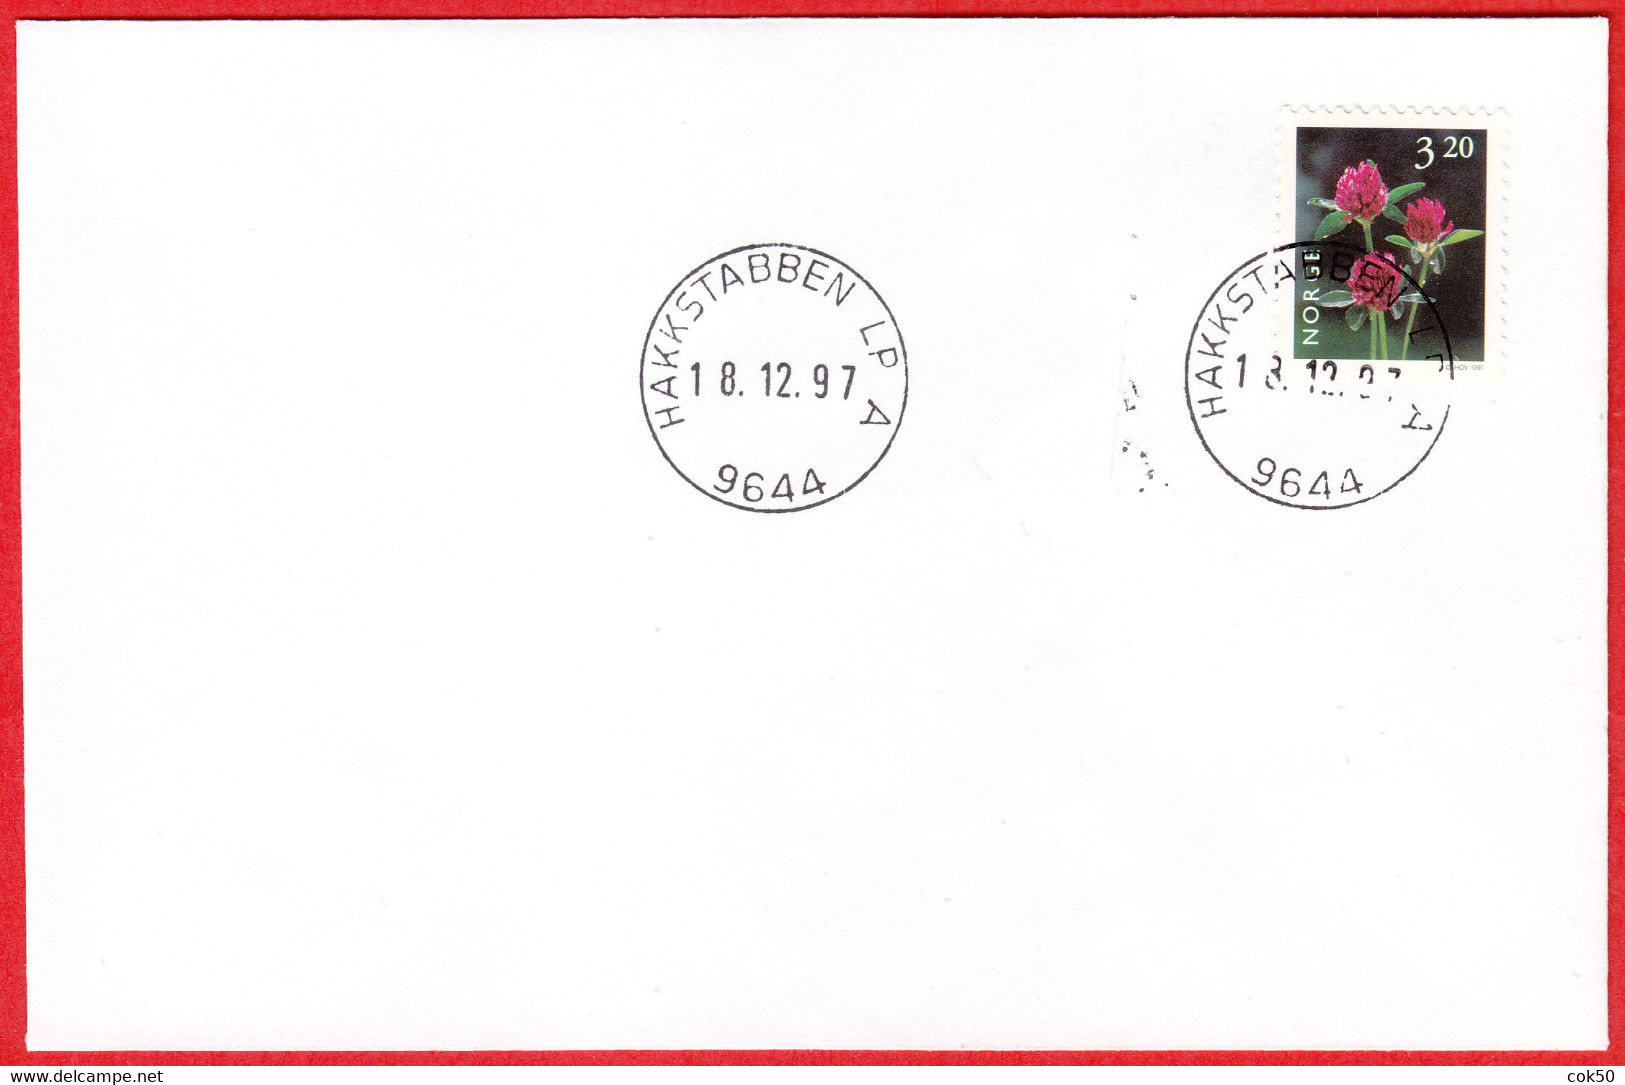 NORWAY -  9644 HAKKSTABBEN LP A - 24 MmØ - (Finnmark County) - Last Day/postoffice Closed On 1997.12.18 - Local Post Stamps